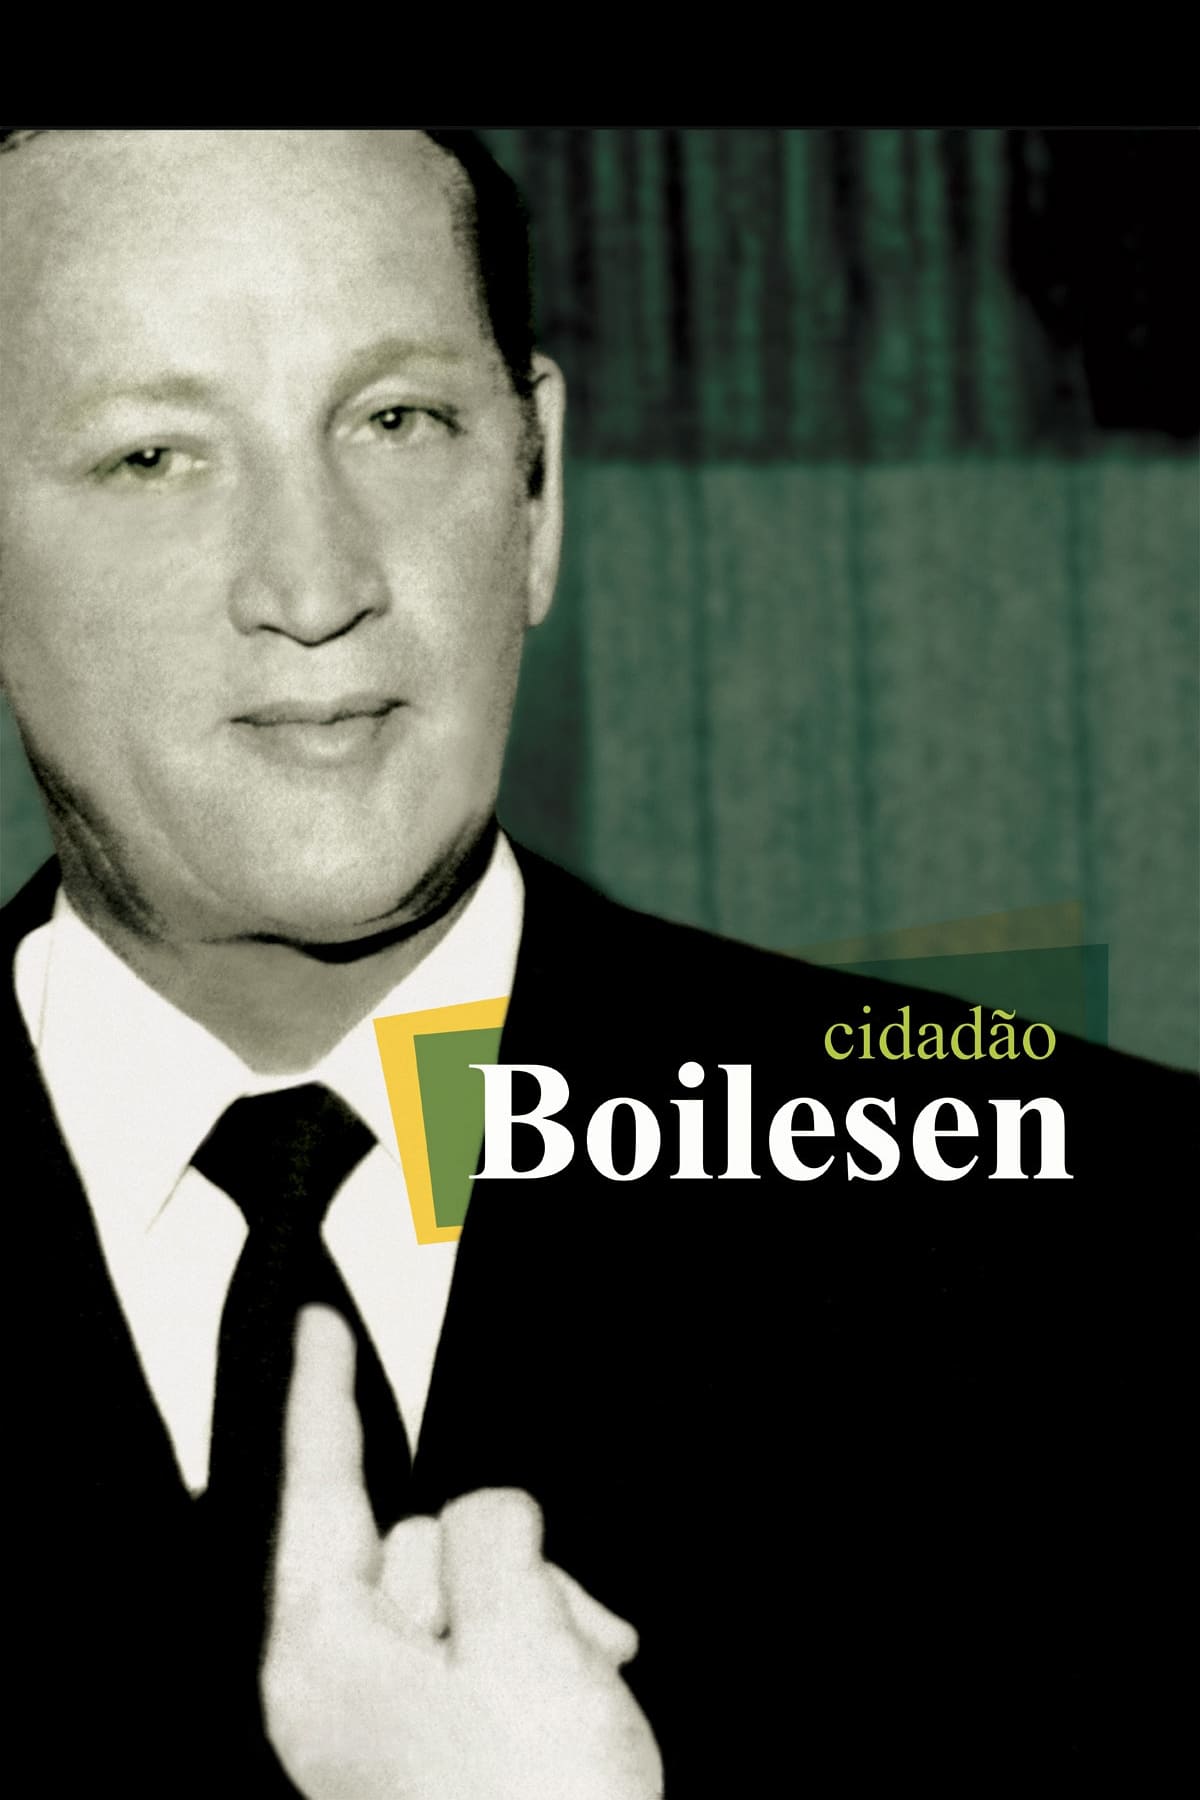 Citizen Boilesen